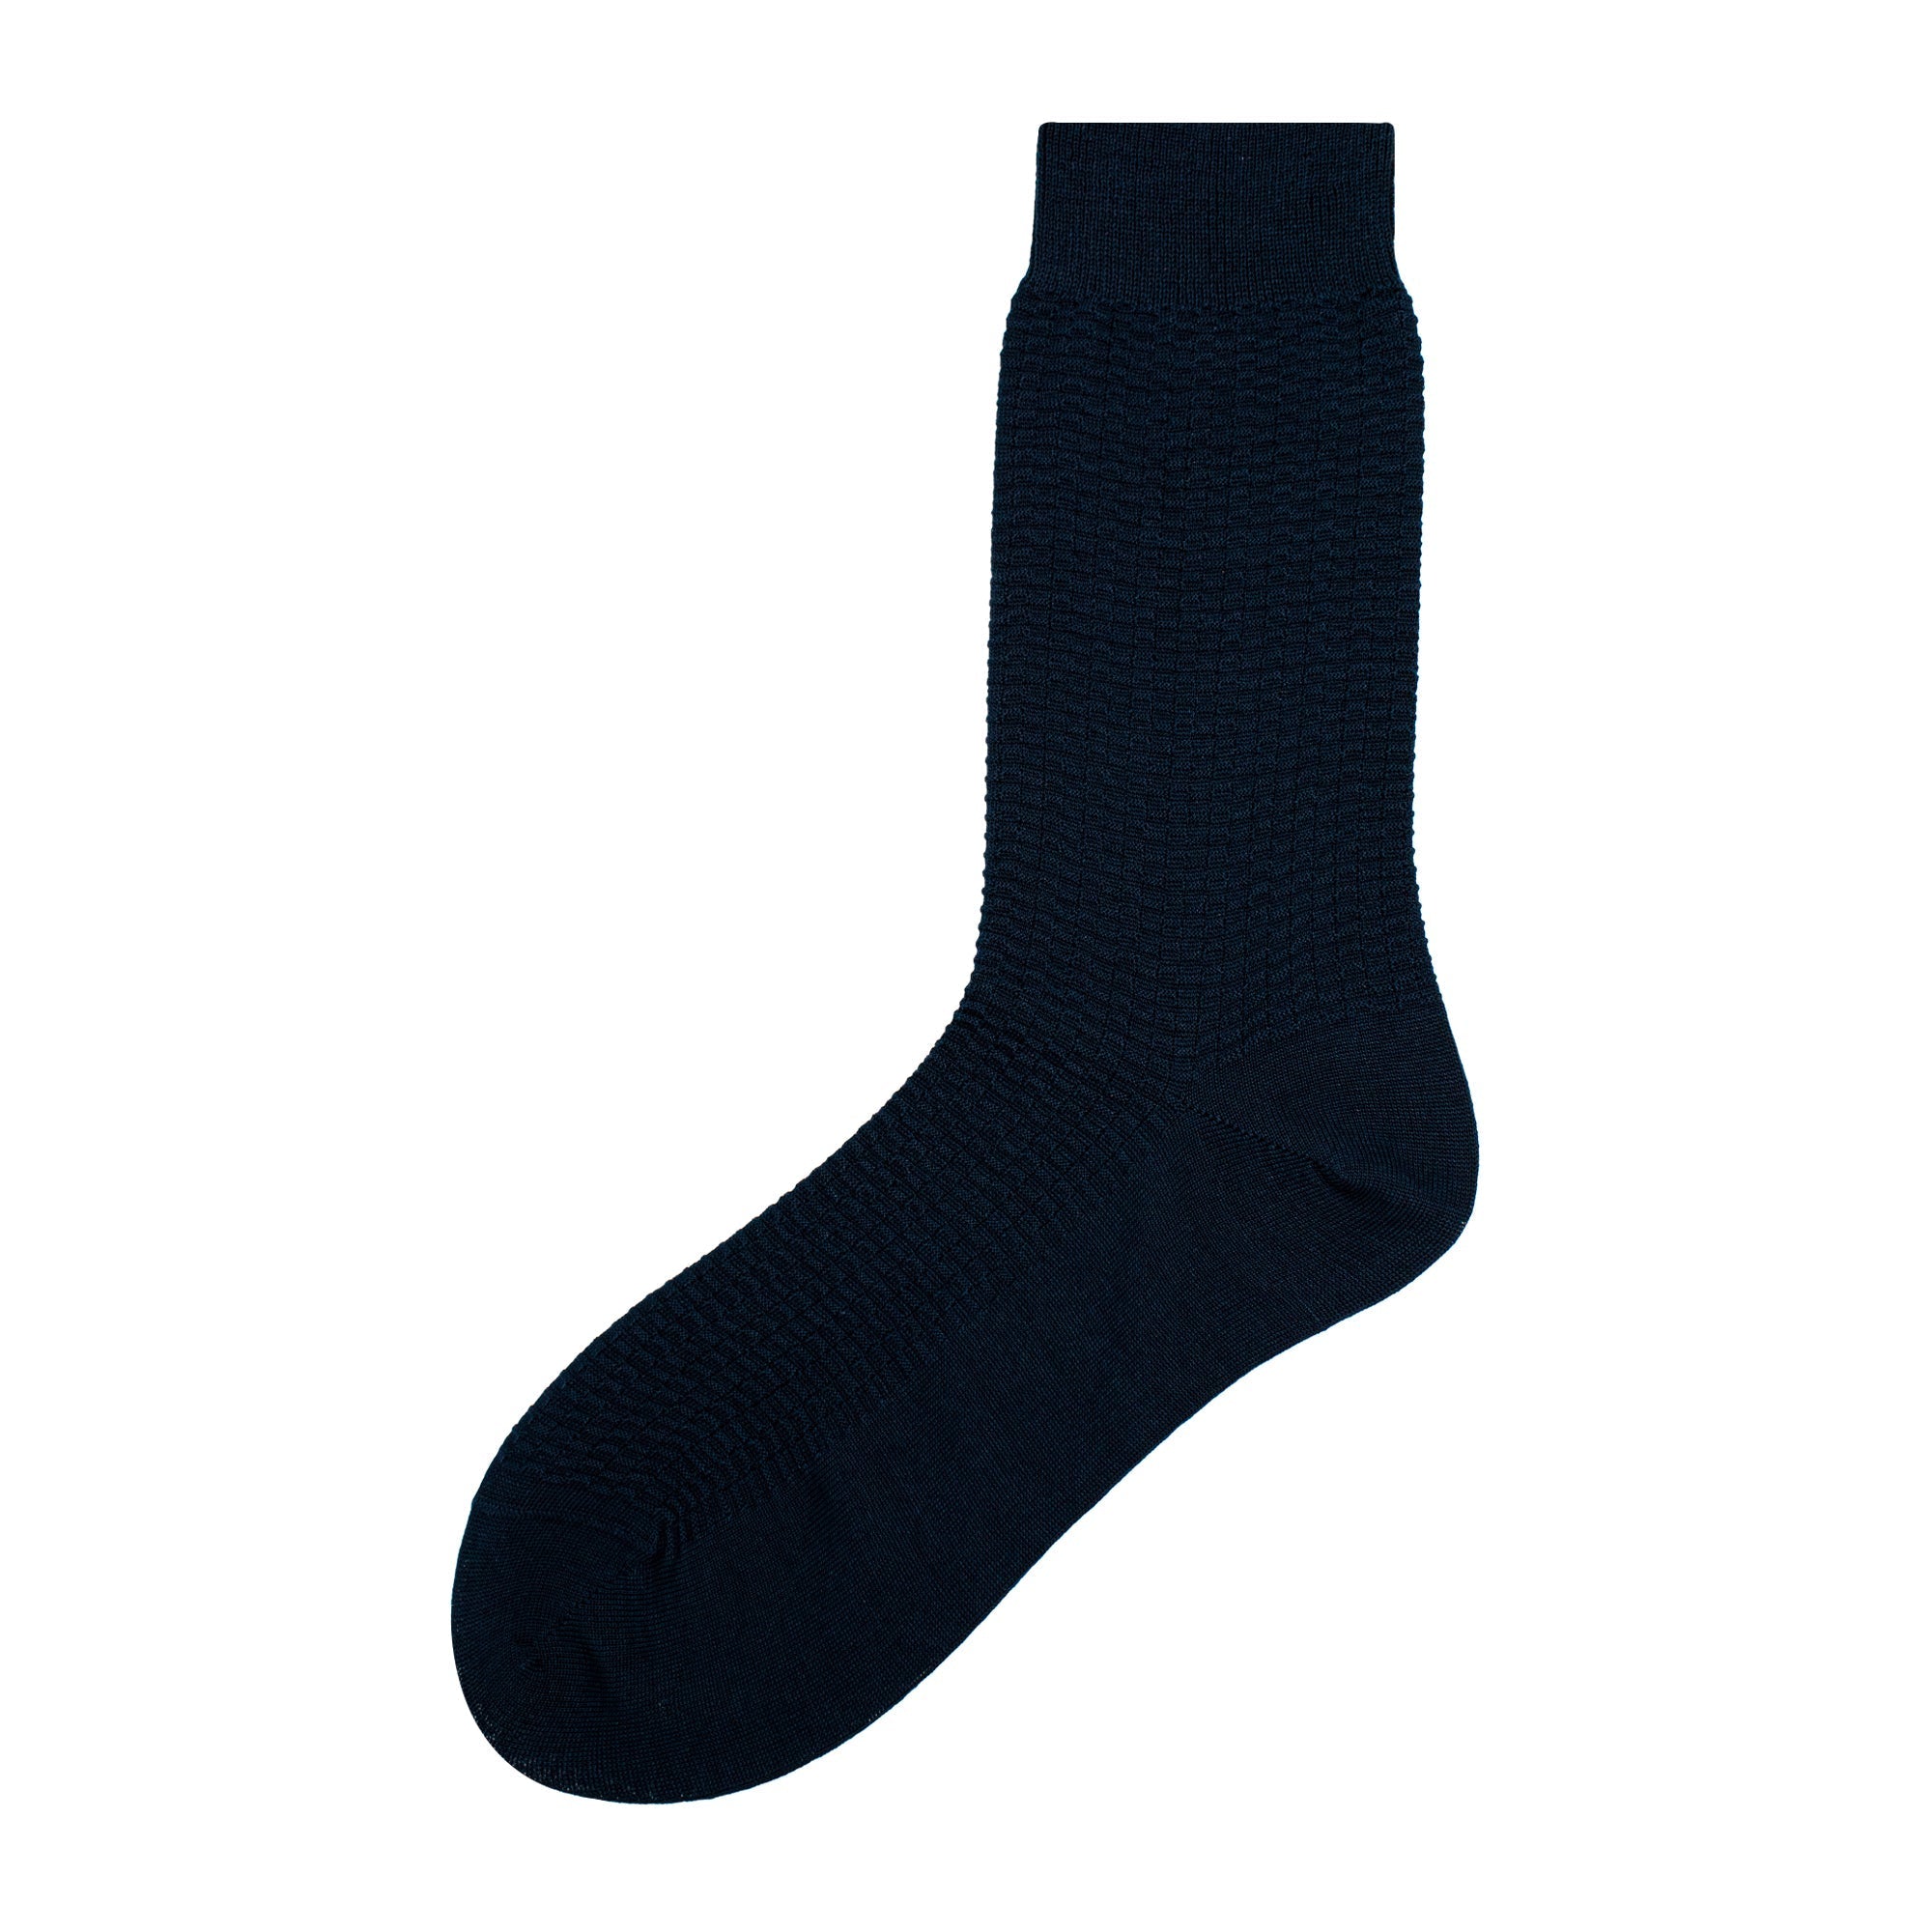 Men's Super Fine Texture Design Fashion Standard Length socks